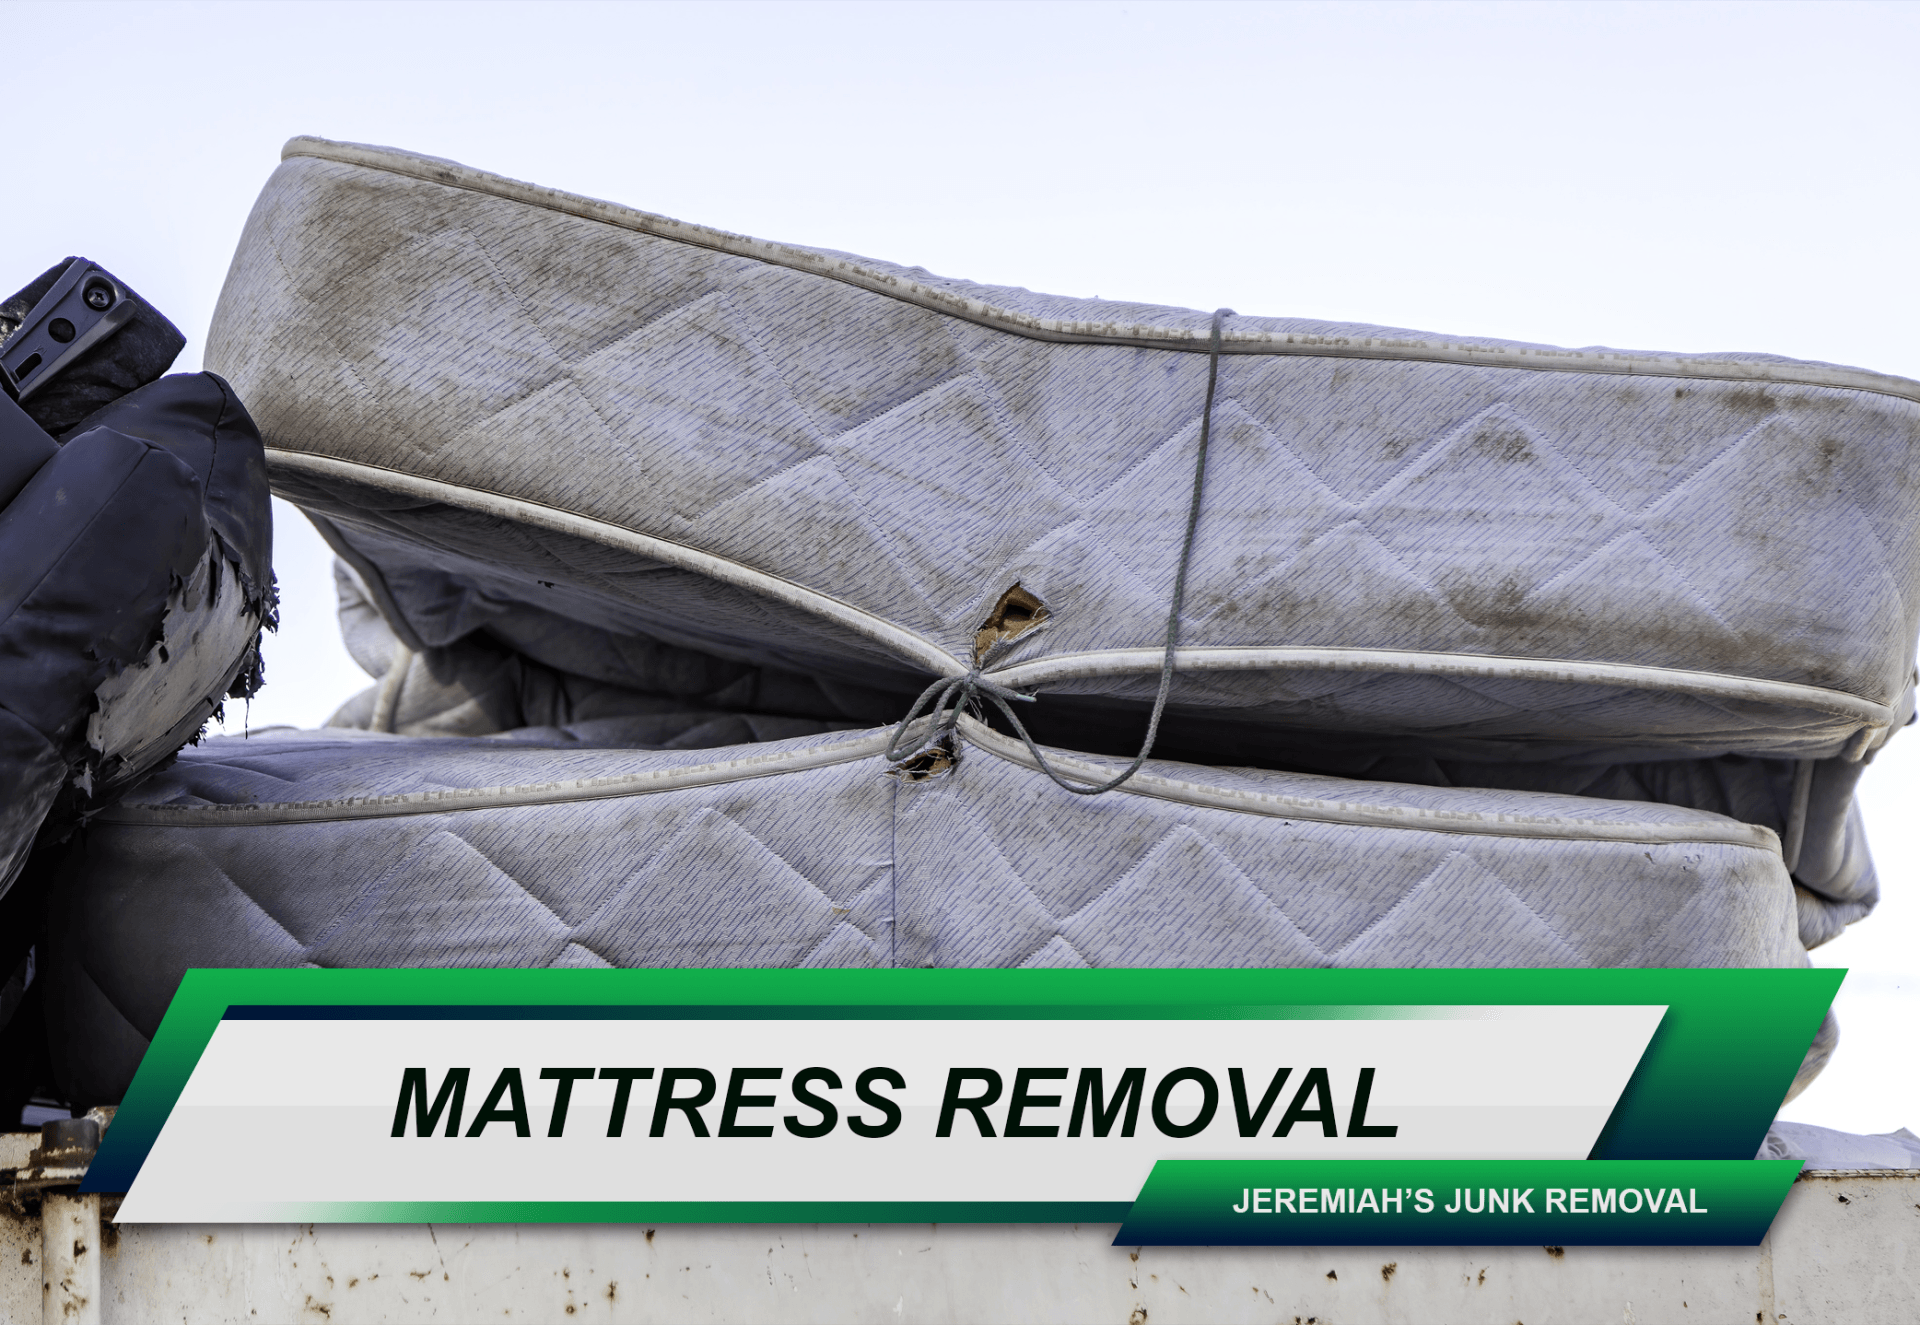 Mattress removal